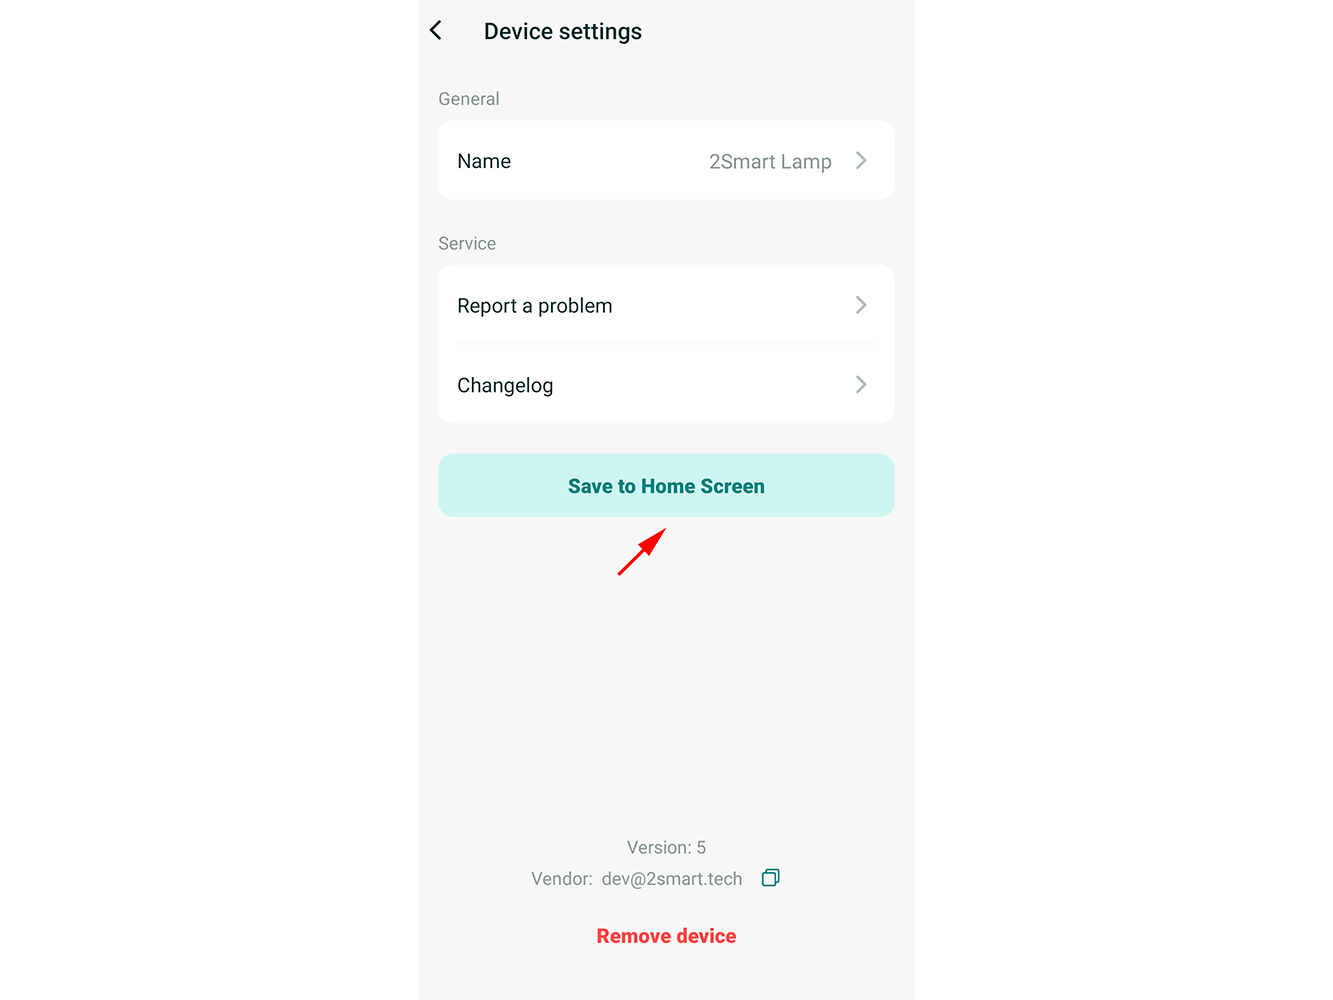 Device settings screen